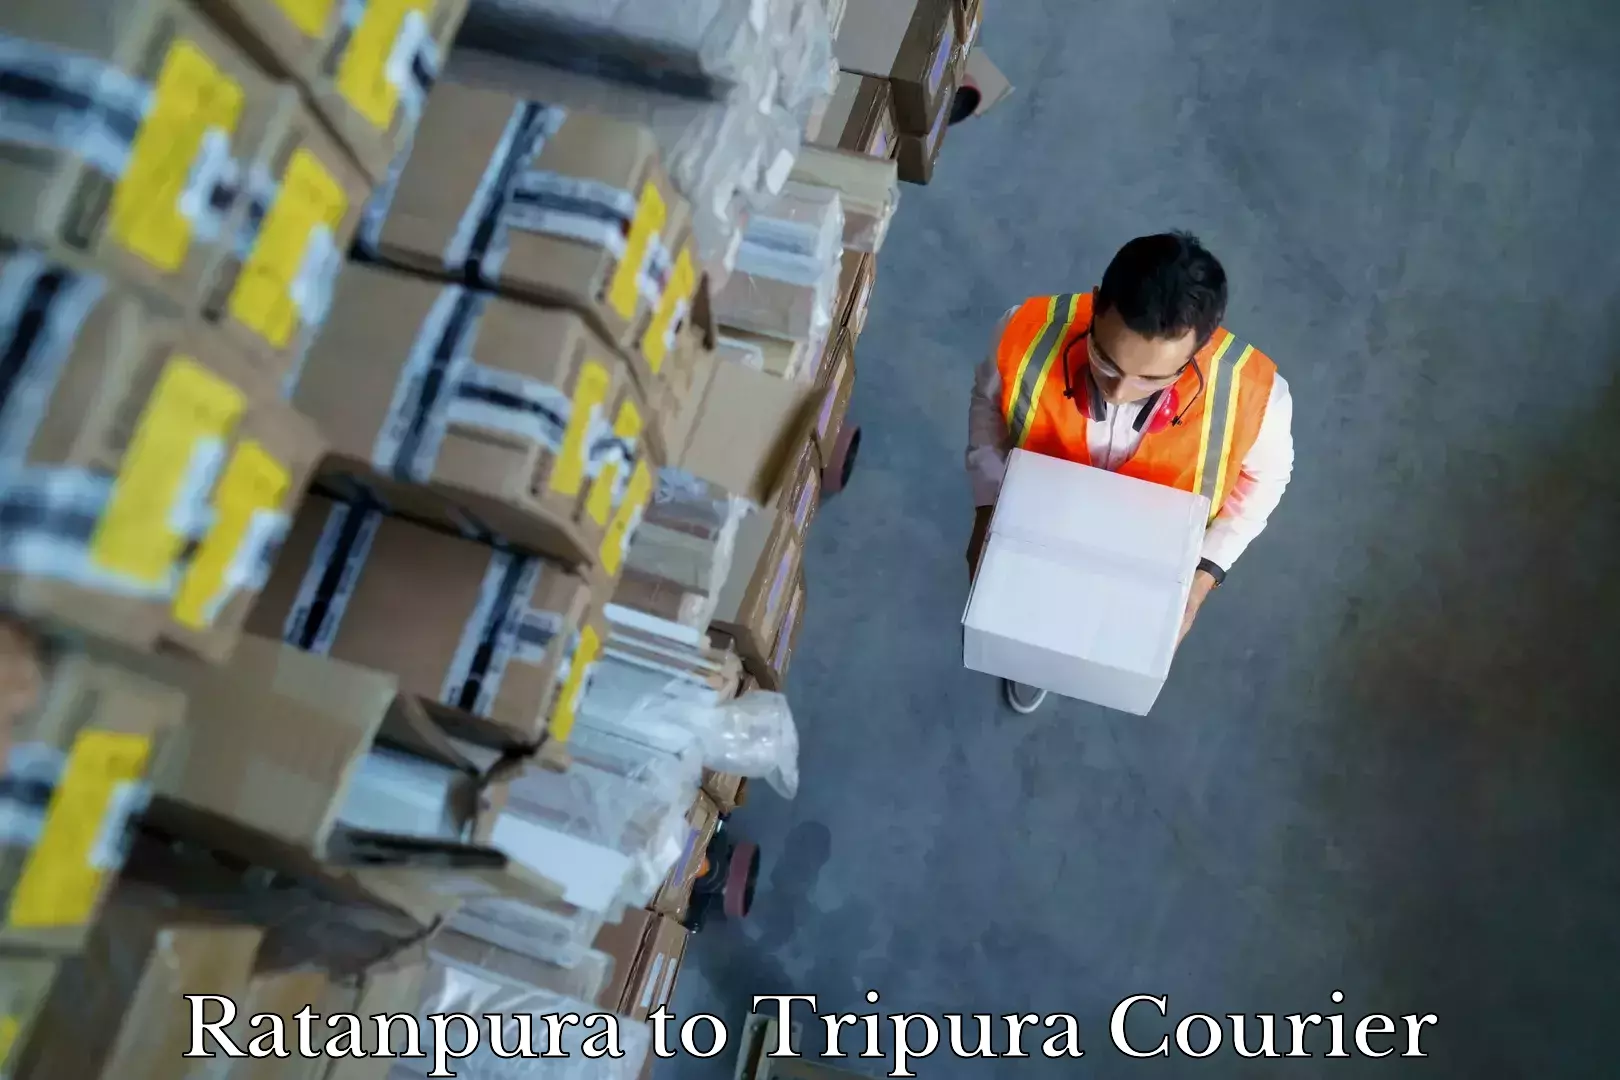 Furniture transport company Ratanpura to Tripura